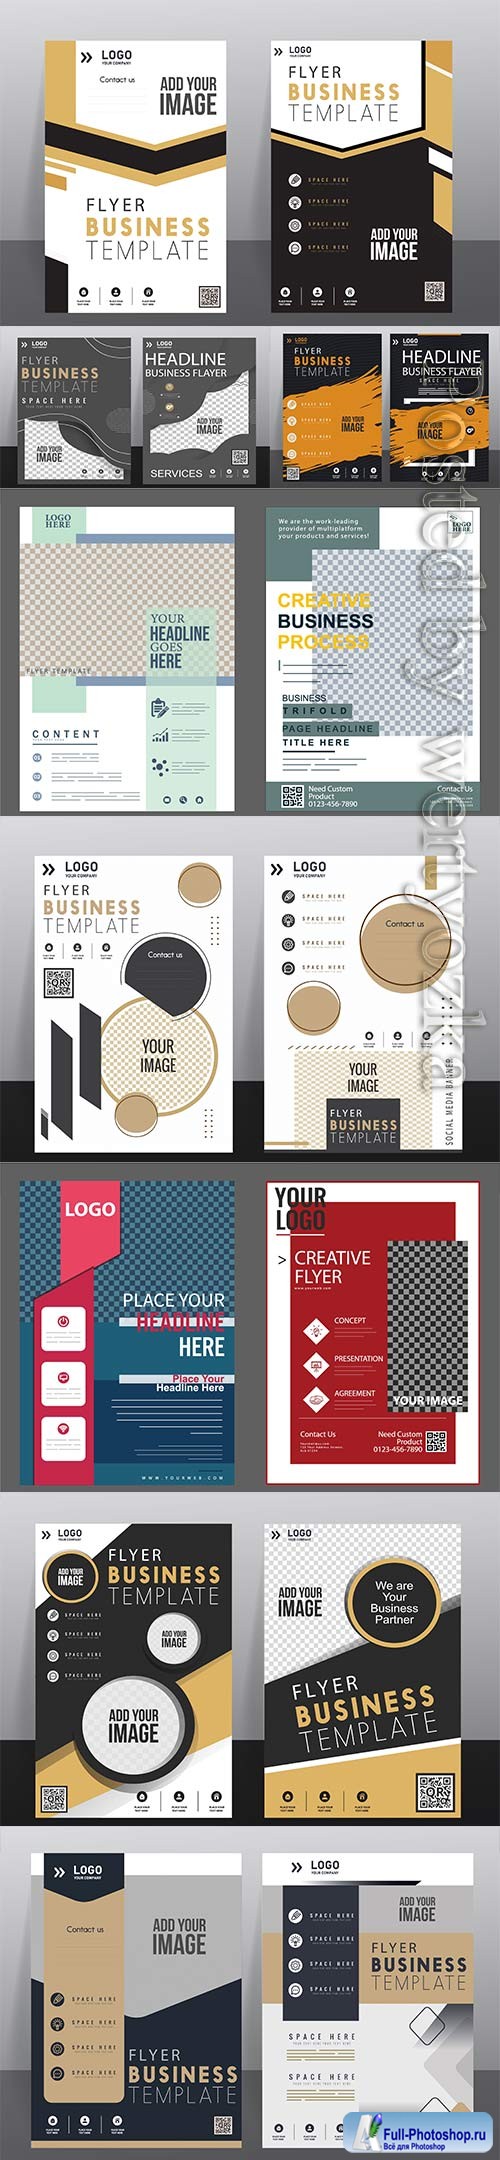 Corporate flyer cover templates vector design